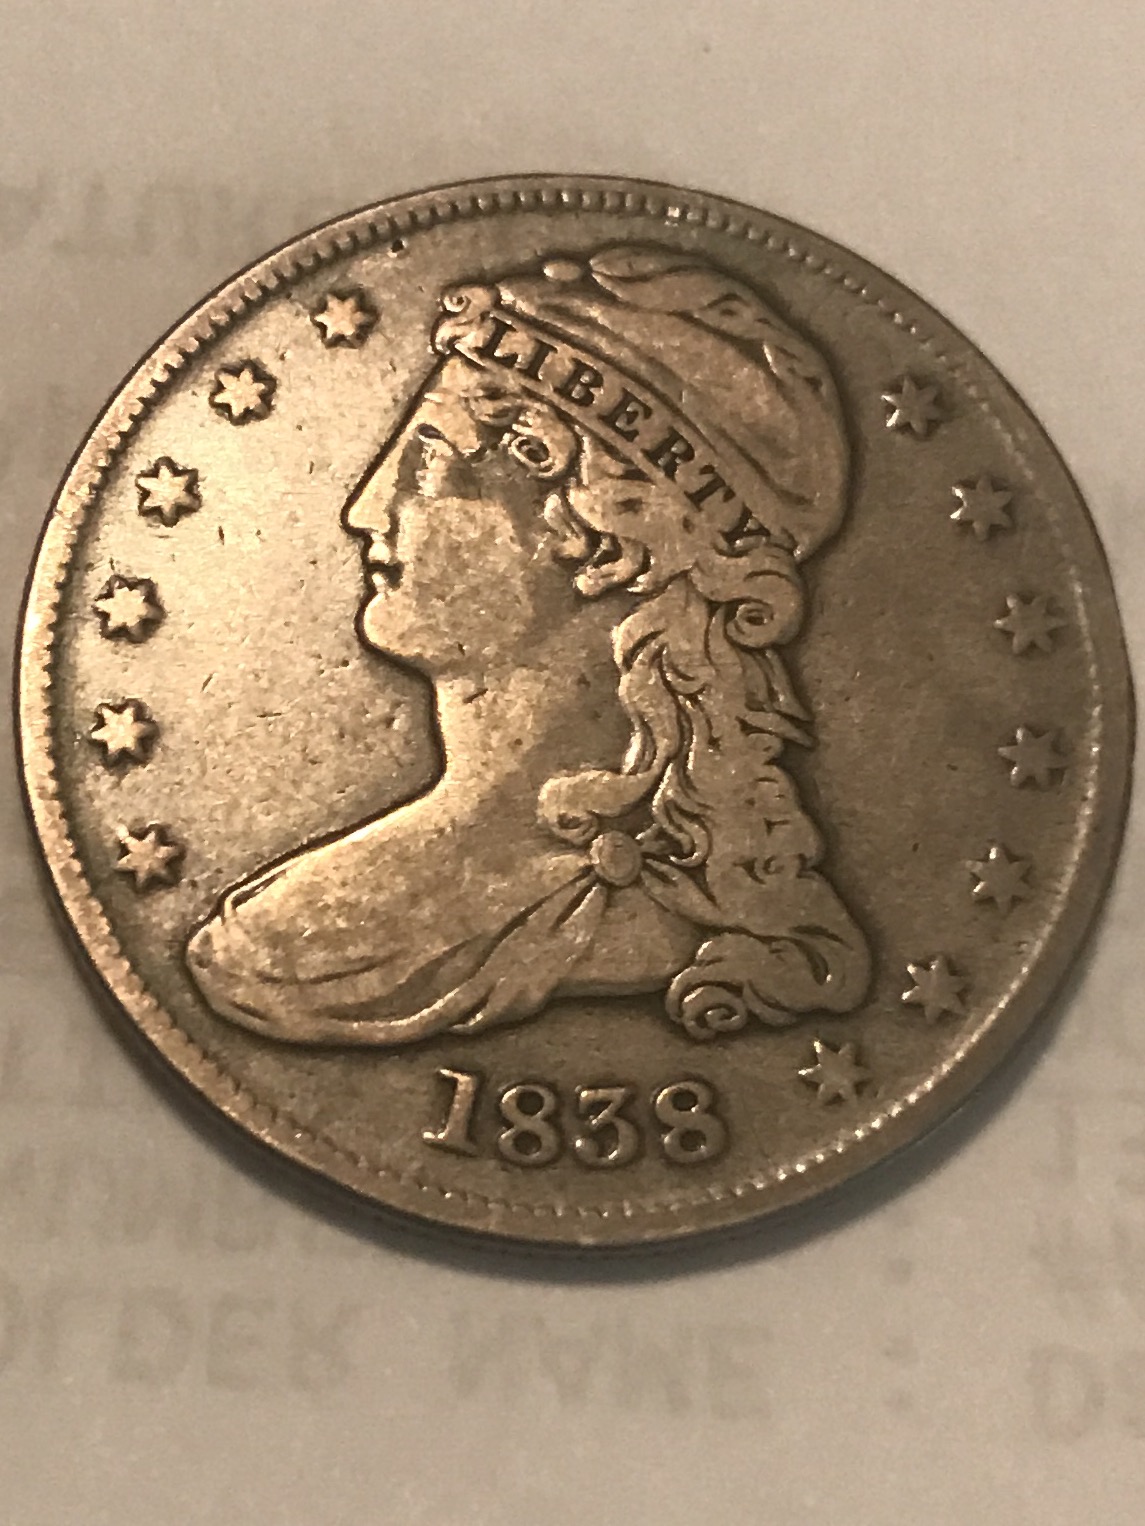 1838 Capped Bust Reeded Edge Half Dollar | Coin Talk